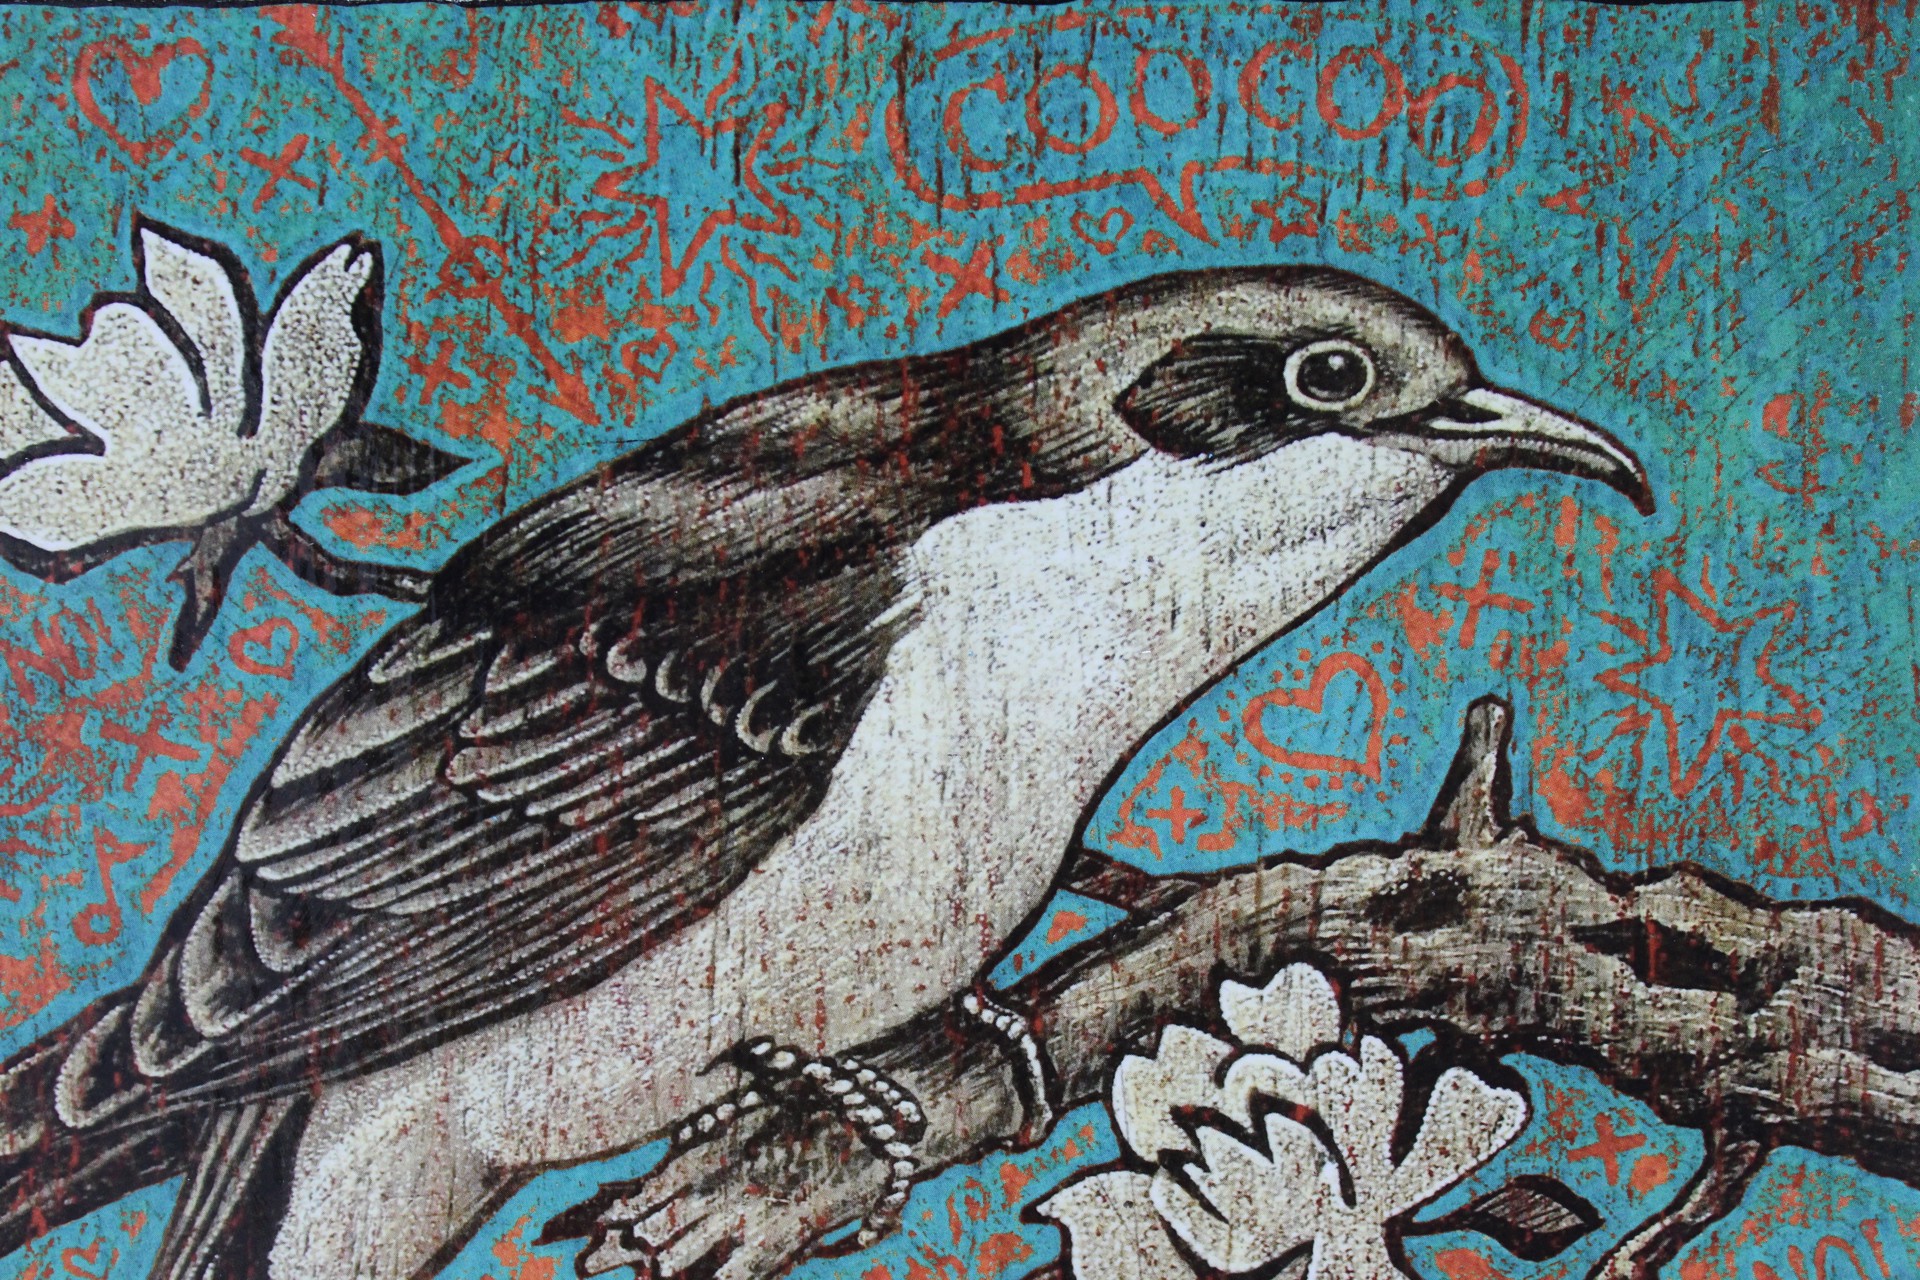 The Cuckoo by Jon Langford